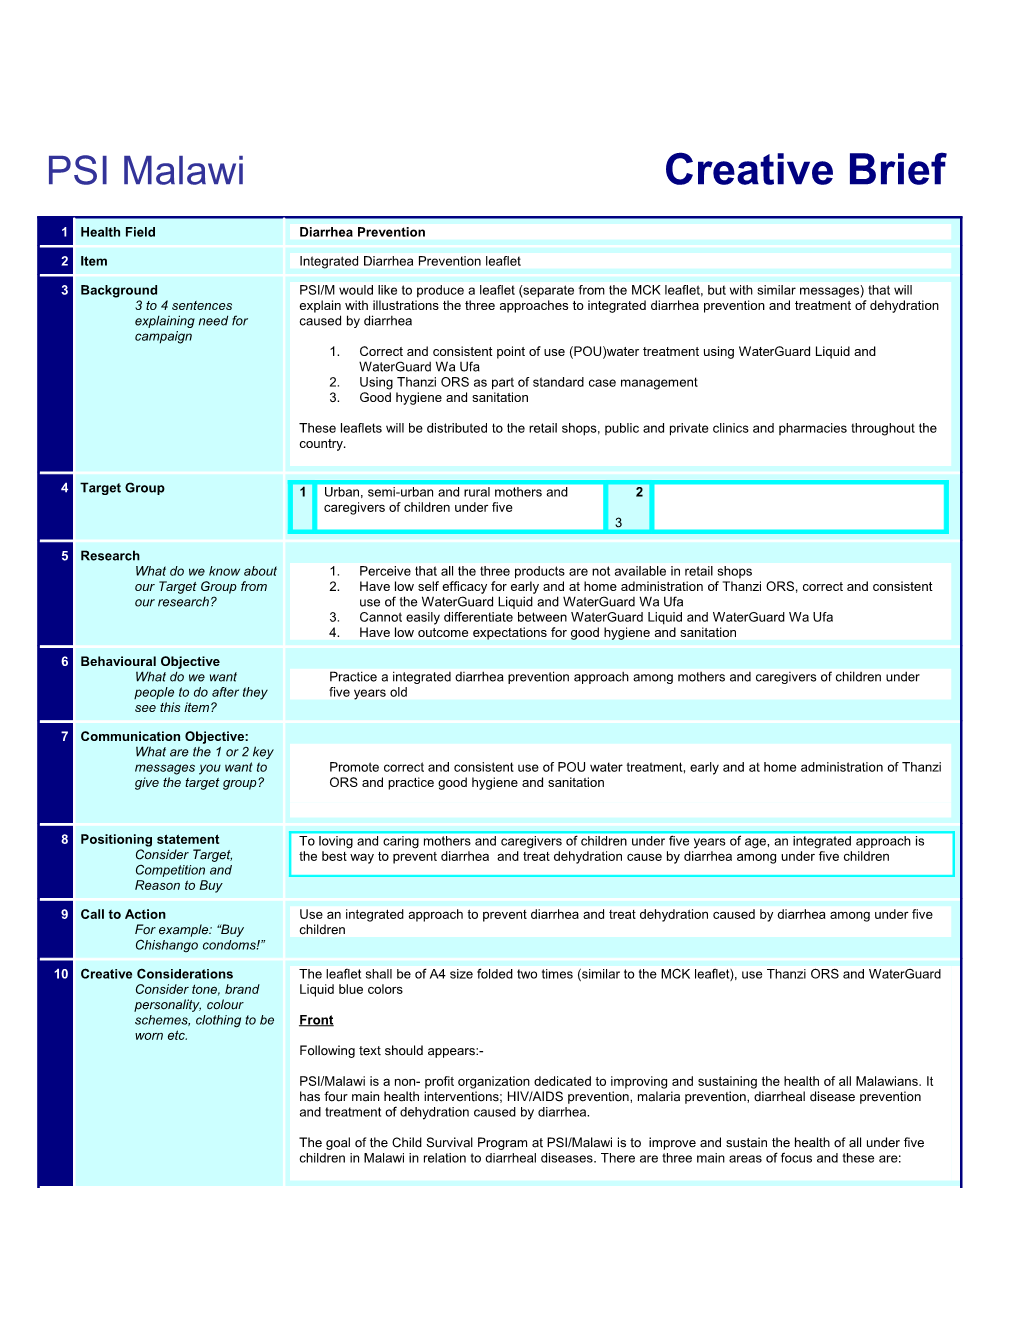 PSI Malawi Creative Brief